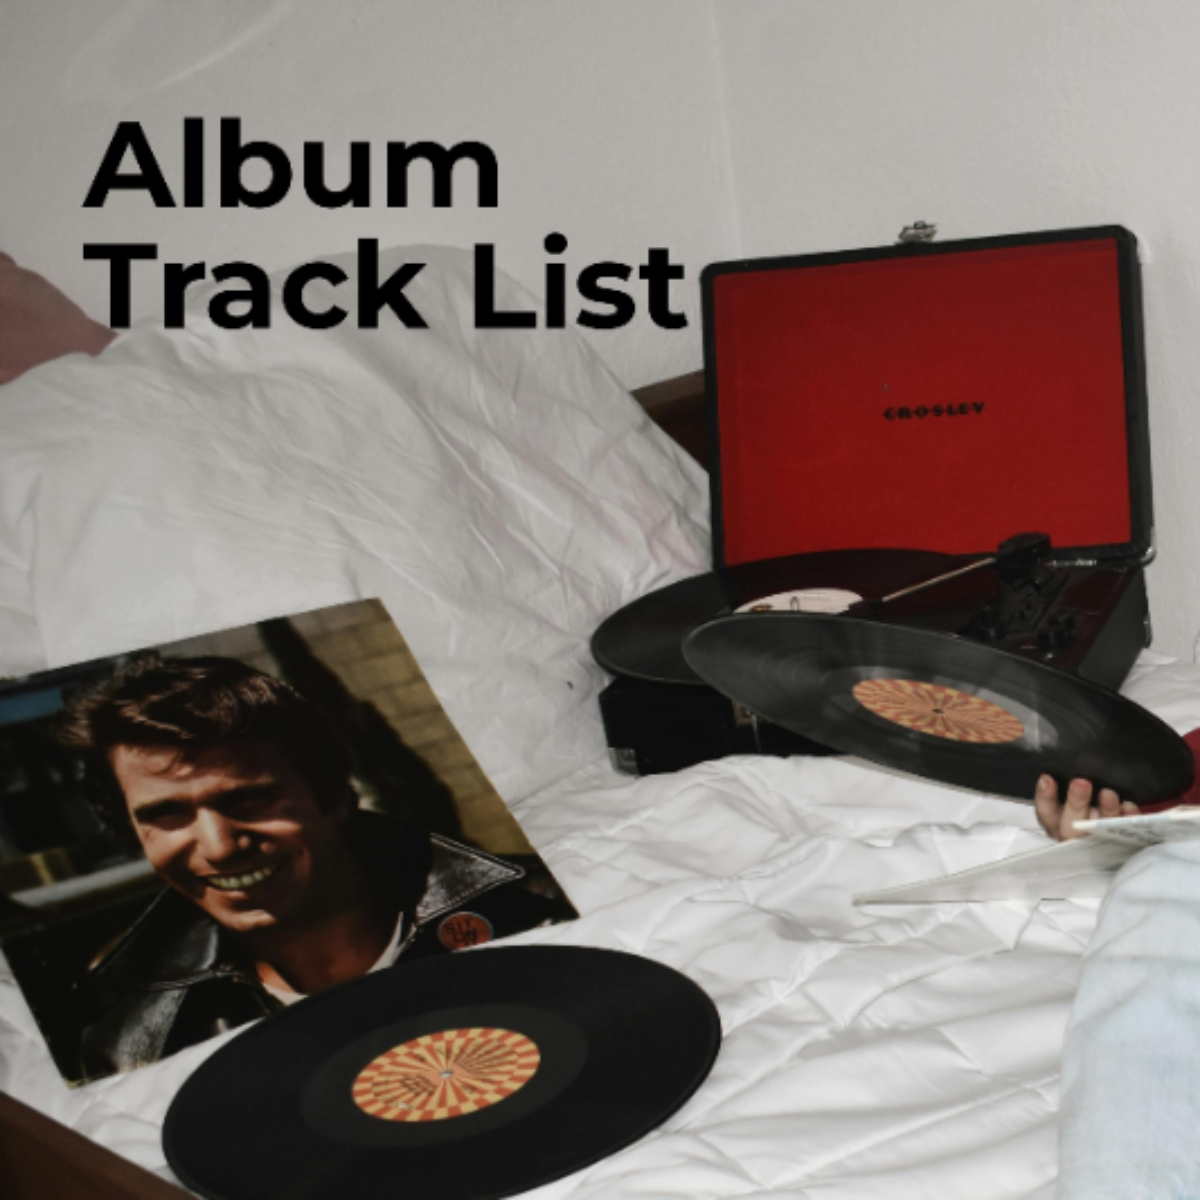 Album Track List Template